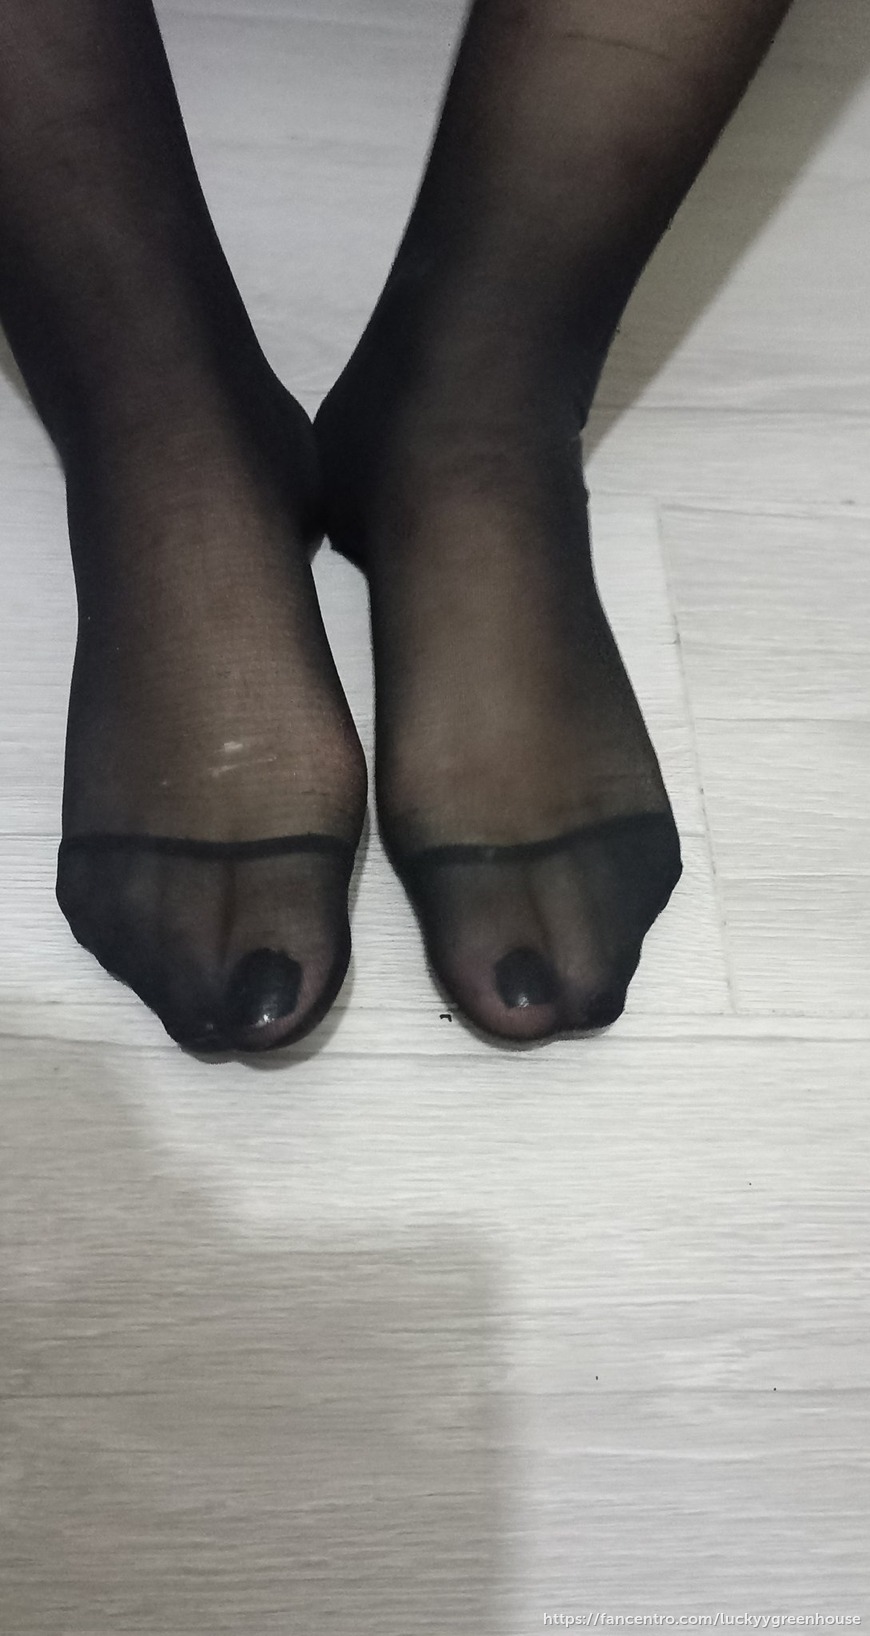 who doesn't love black socks 1